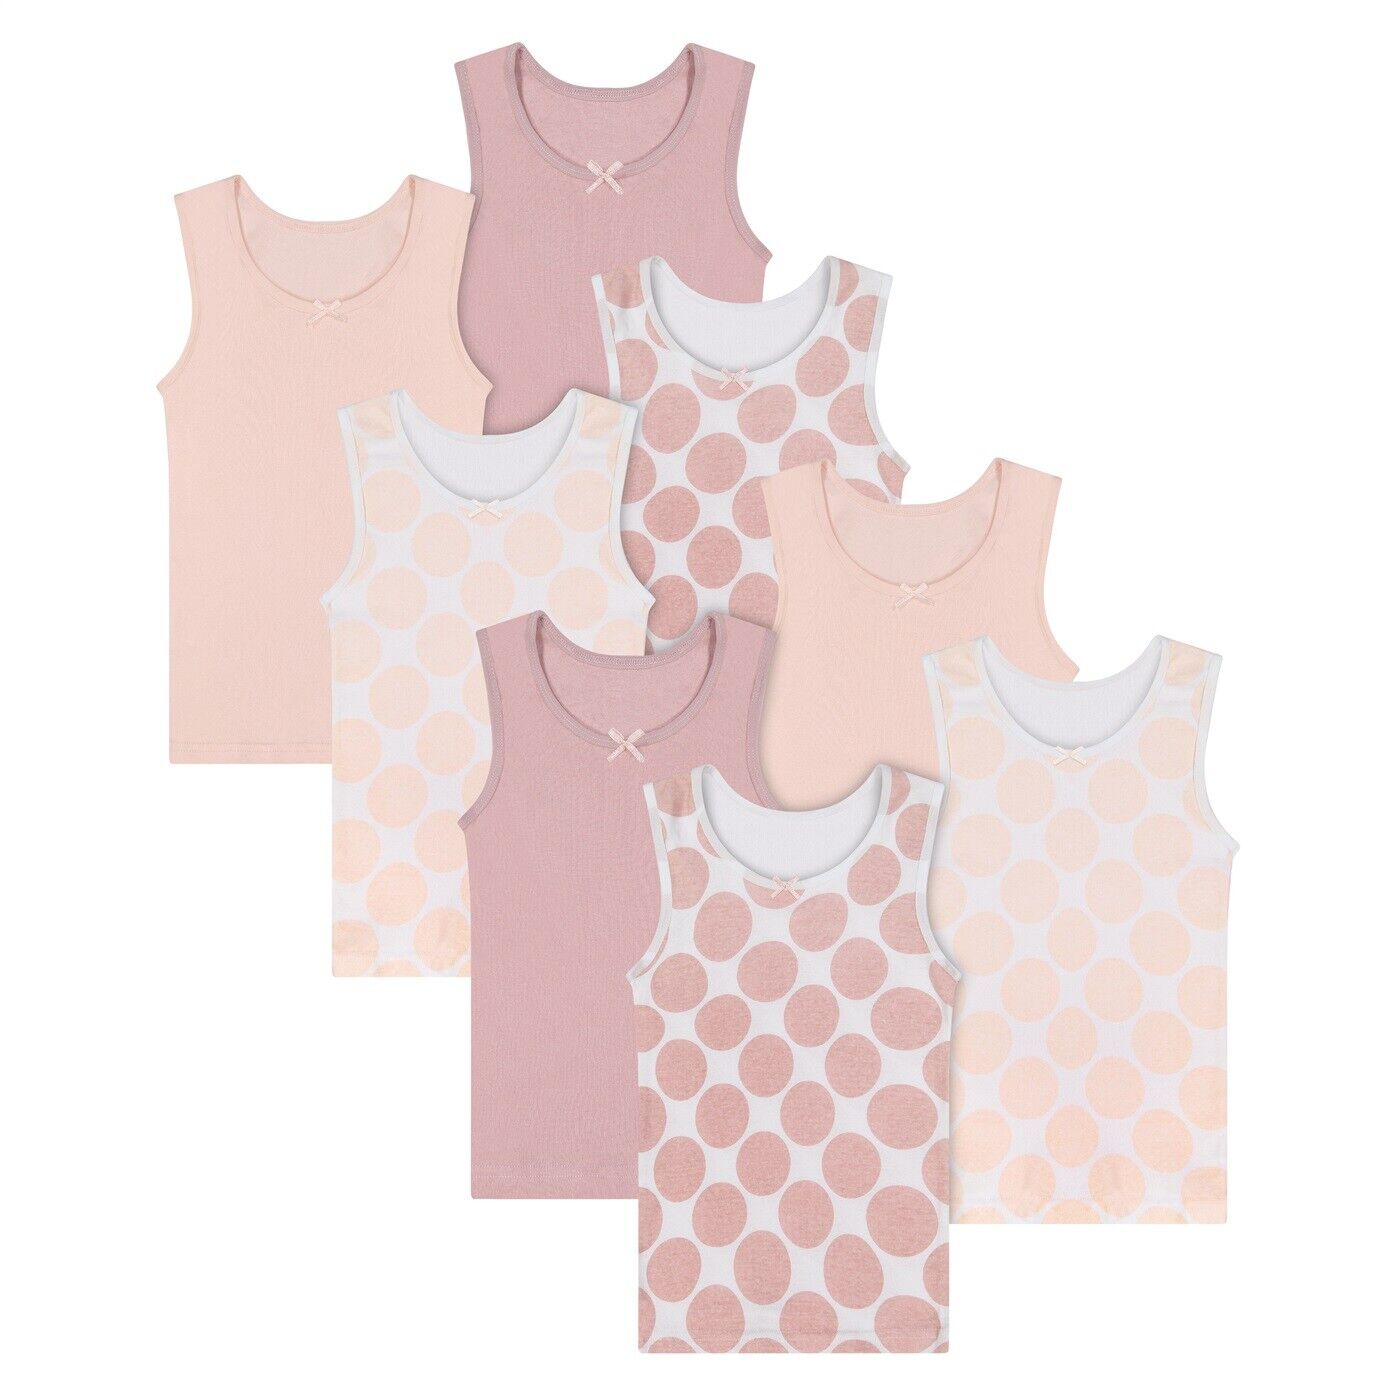 Buyless Fashion Girls Tagless Cami Pink Polka Dot Undershirts Cotton (8 Pack)